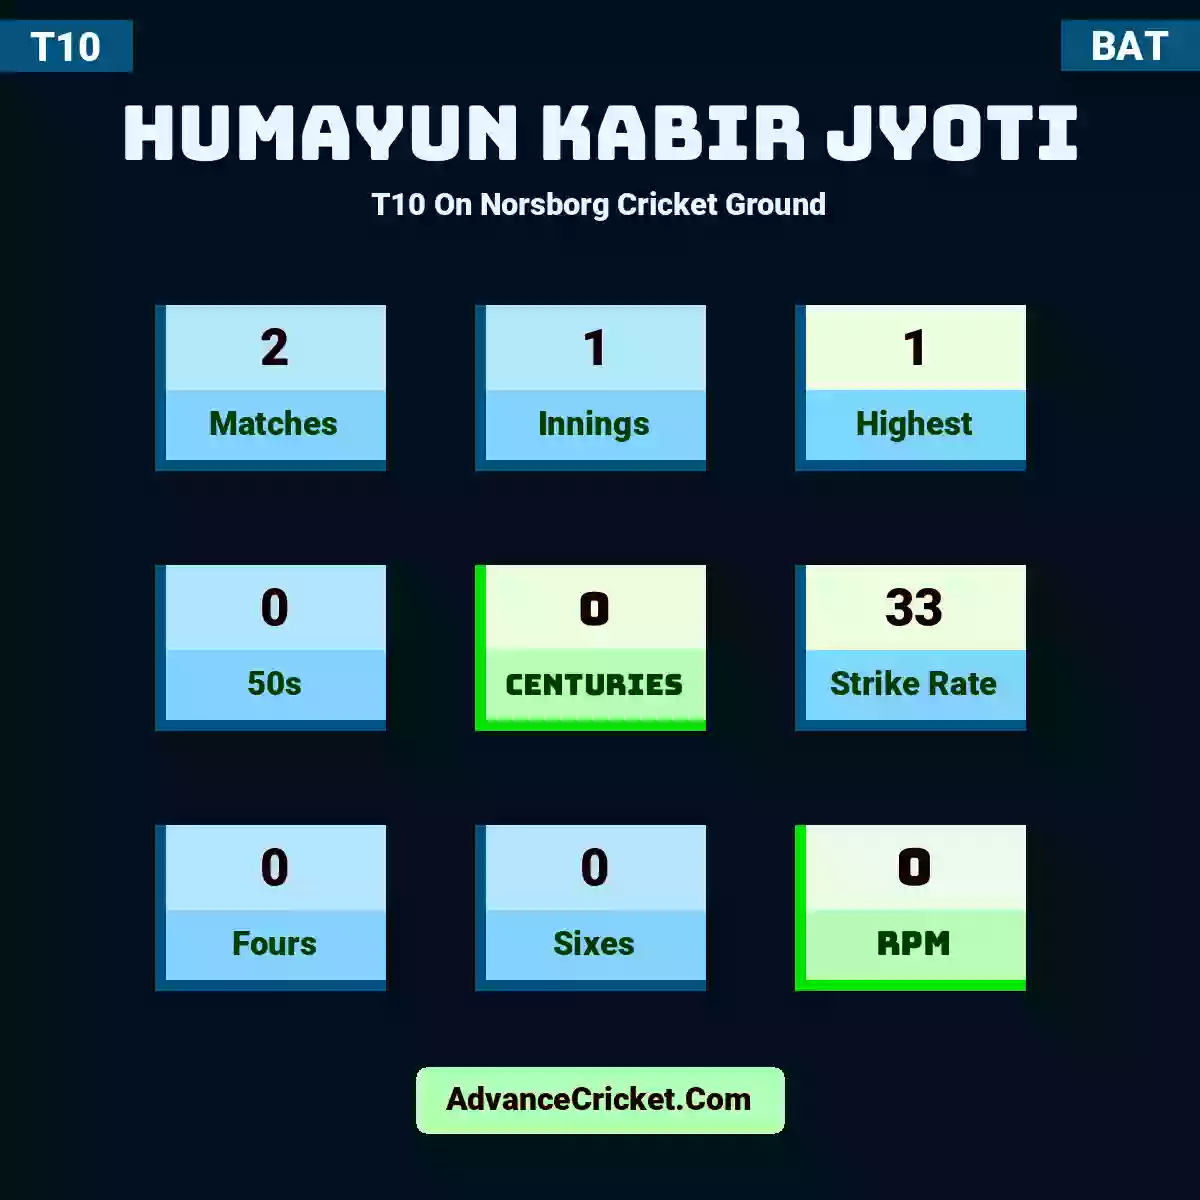 Humayun Kabir Jyoti T10  On Norsborg Cricket Ground, Humayun Kabir Jyoti played 2 matches, scored 1 runs as highest, 0 half-centuries, and 0 centuries, with a strike rate of 33. H.Kabir.Jyoti hit 0 fours and 0 sixes, with an RPM of 0.